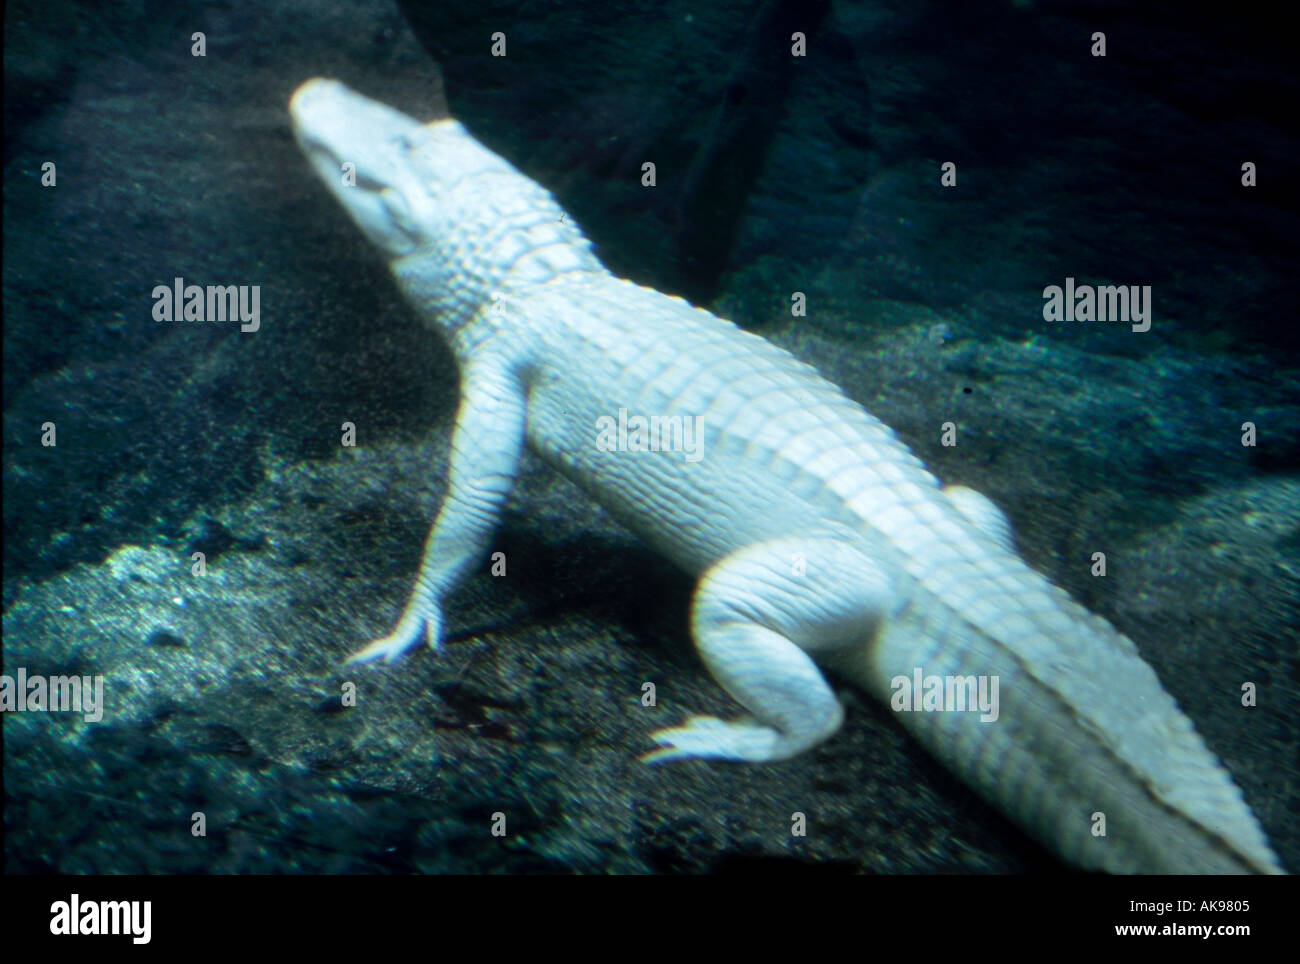 Albino alligator resting underwater Stock Photo